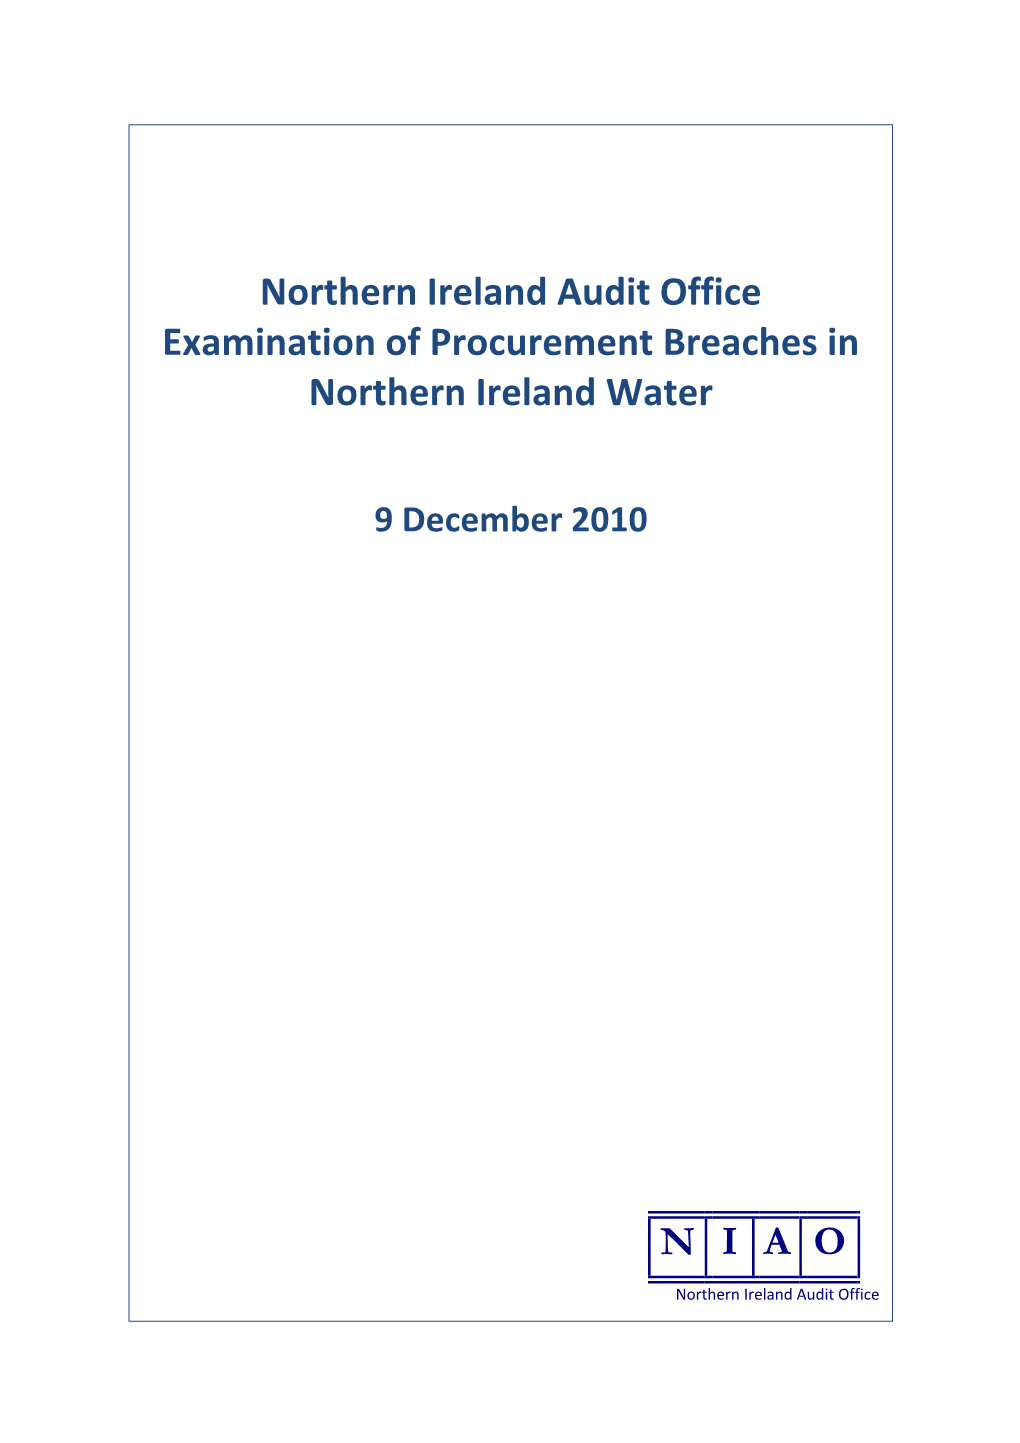 Northern Ireland Audit Office Examination of Procurement Breaches in Northern Ireland Water N I